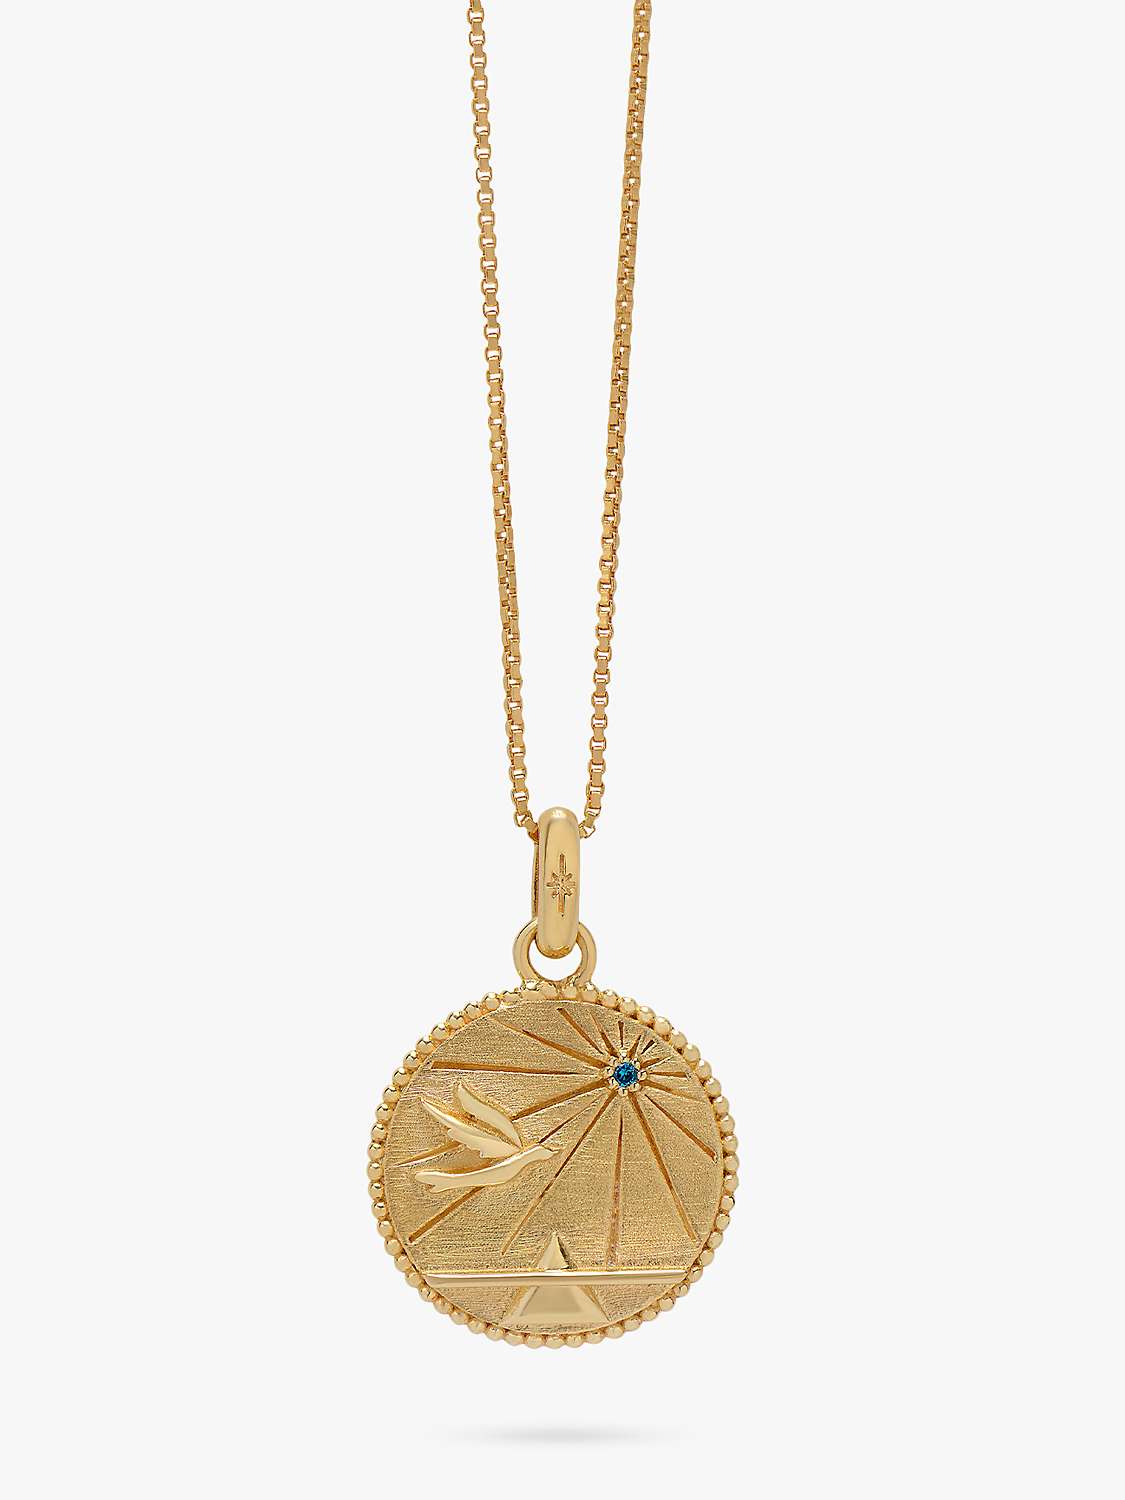 Buy Rachel Jackson London Personalised Elements Air Art Coin Pendant Necklace, Gold Online at johnlewis.com